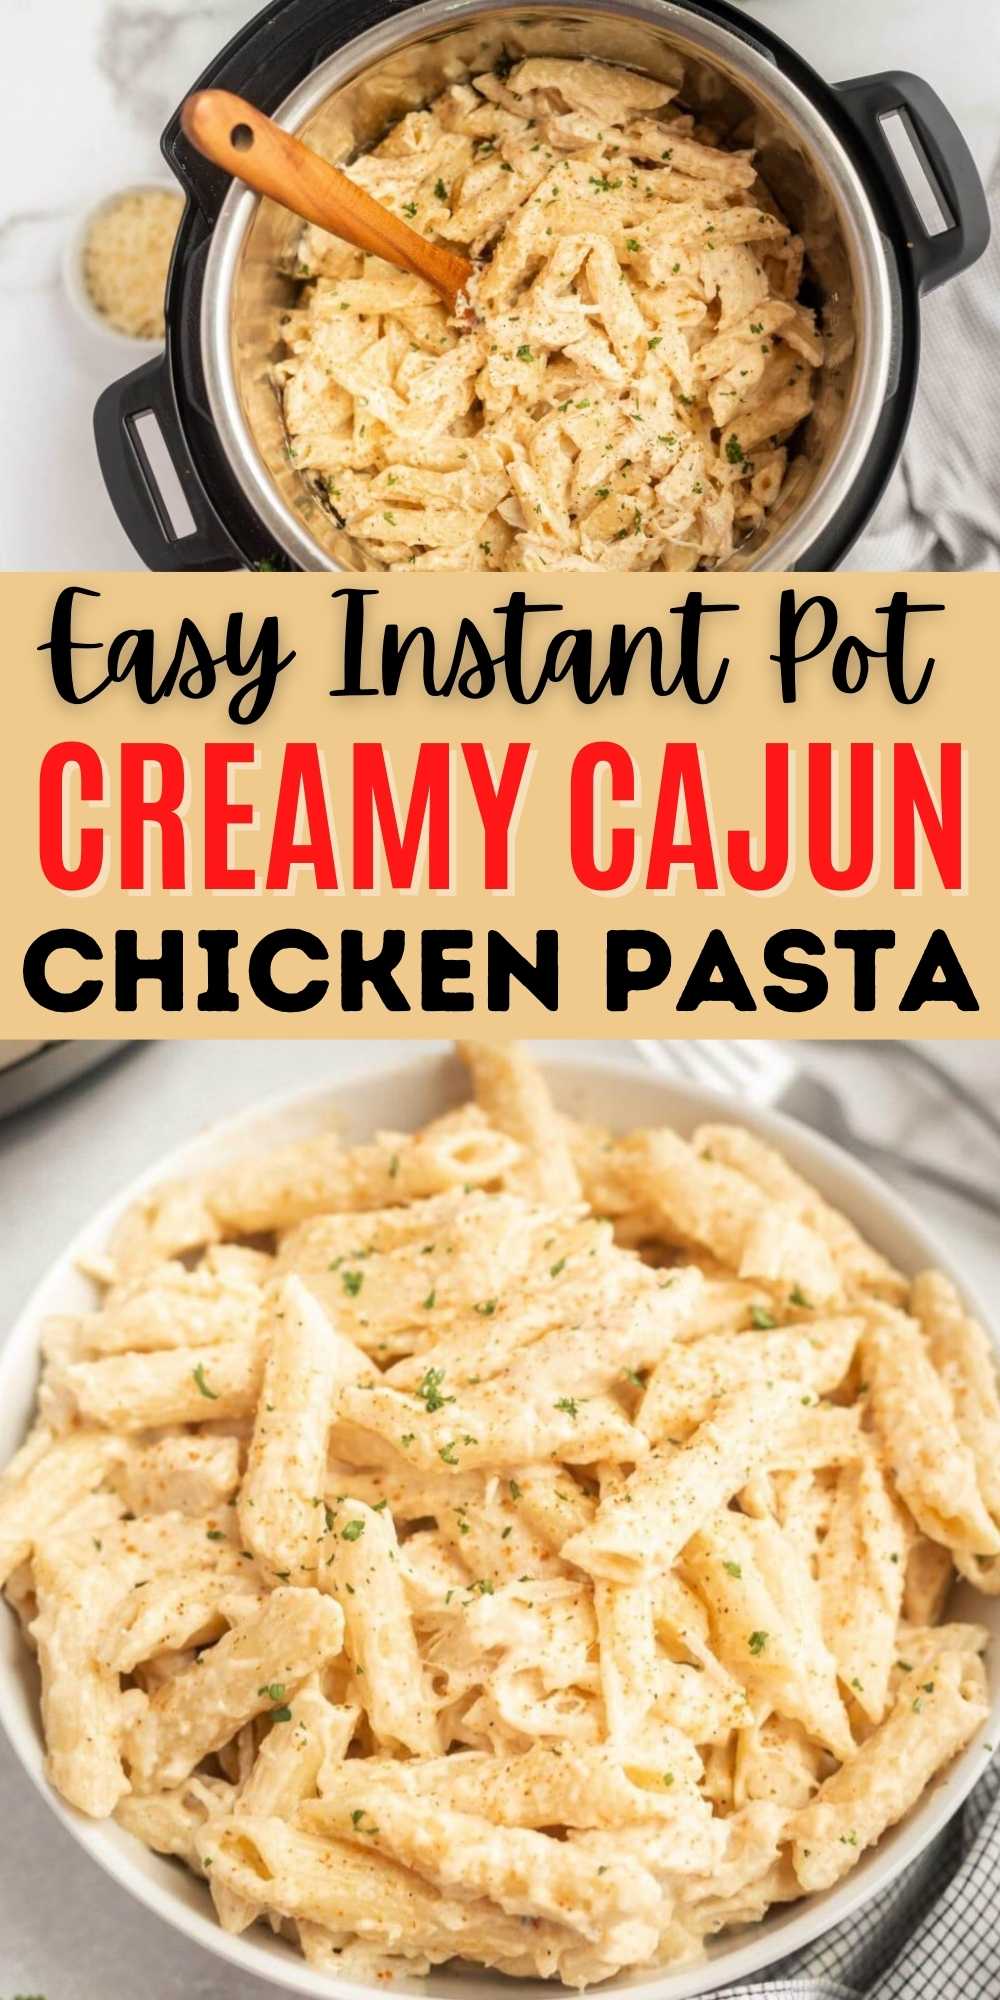 Instant Pot Creamy Cajun Chicken Pasta Recipe is easy. Everyone will go crazy over the creamy sauce with the perfect amount of Cajun flavor. #eatingonadime #cajunpasta